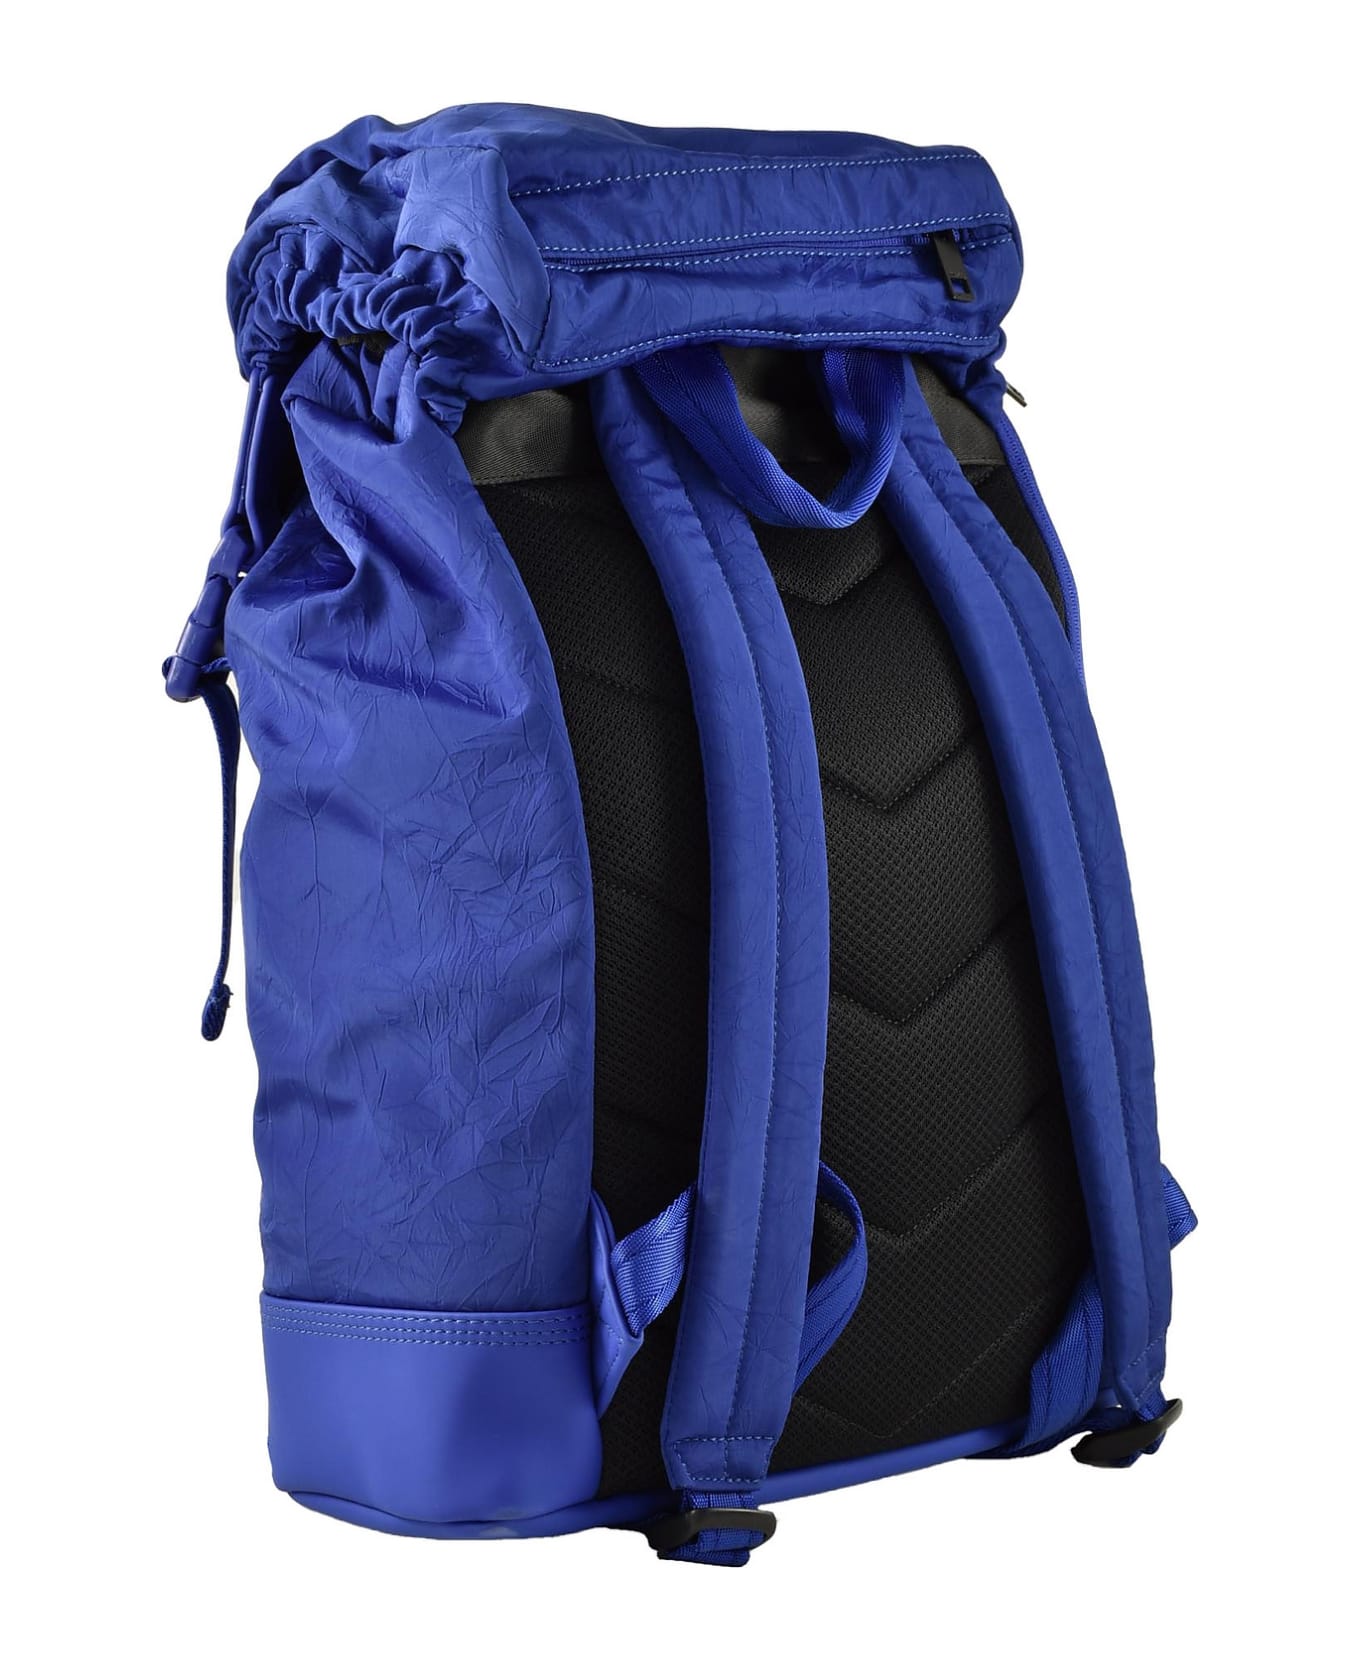 Diesel Men's Bluette Backpack - Blue